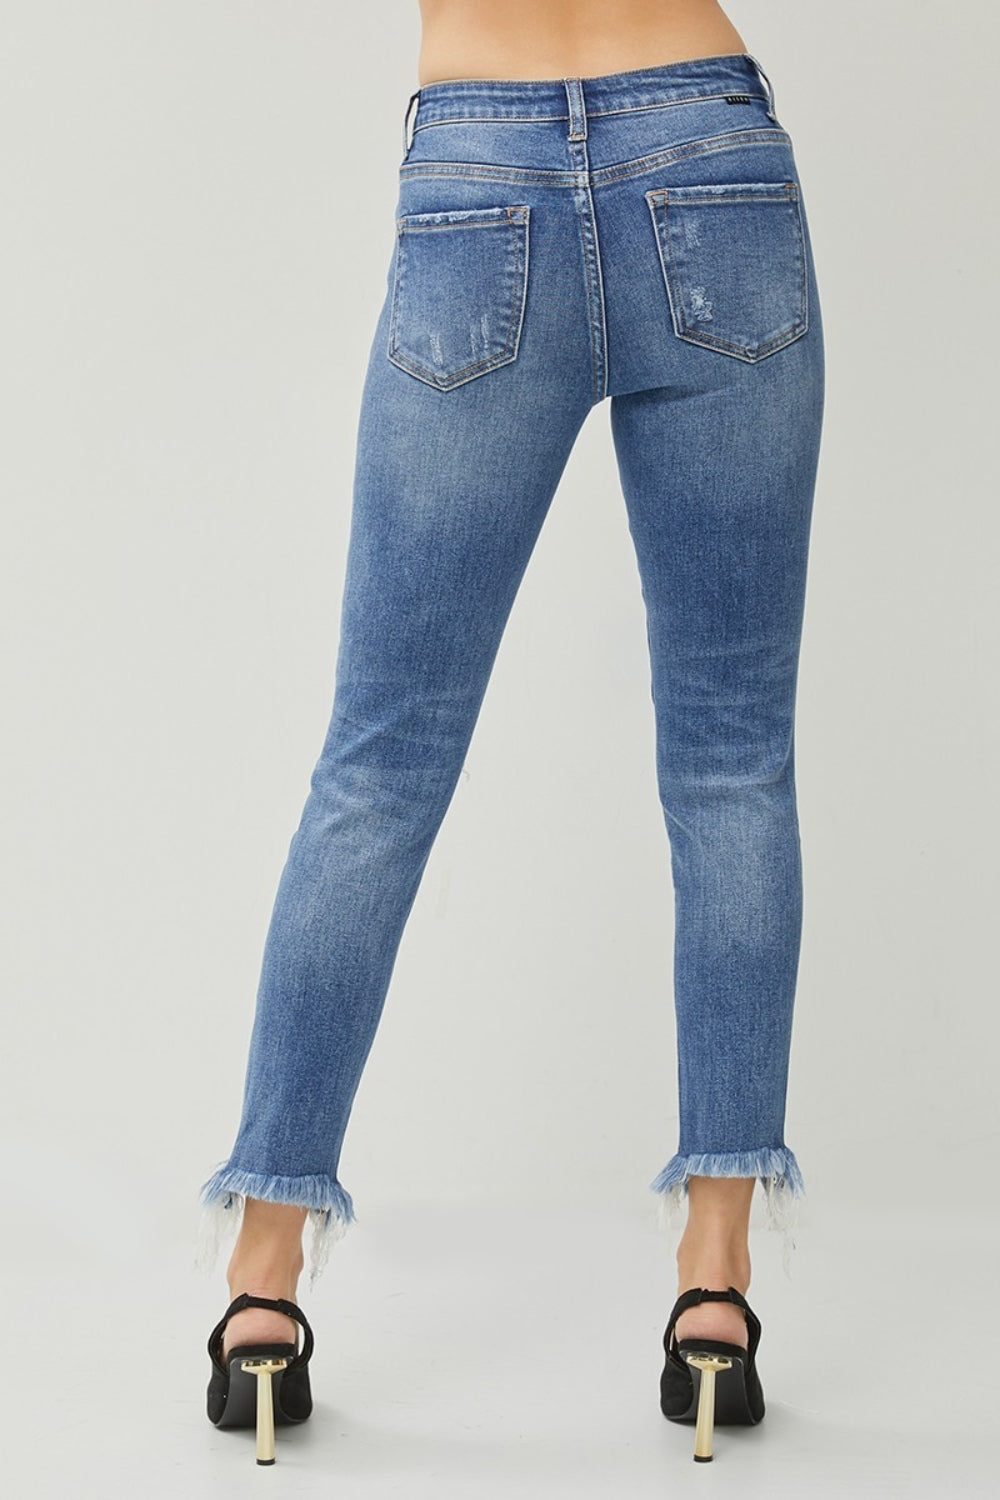 RISEN - Skinny Jeans - Distressed - Frayed Hem - Inspired Eye Boutique